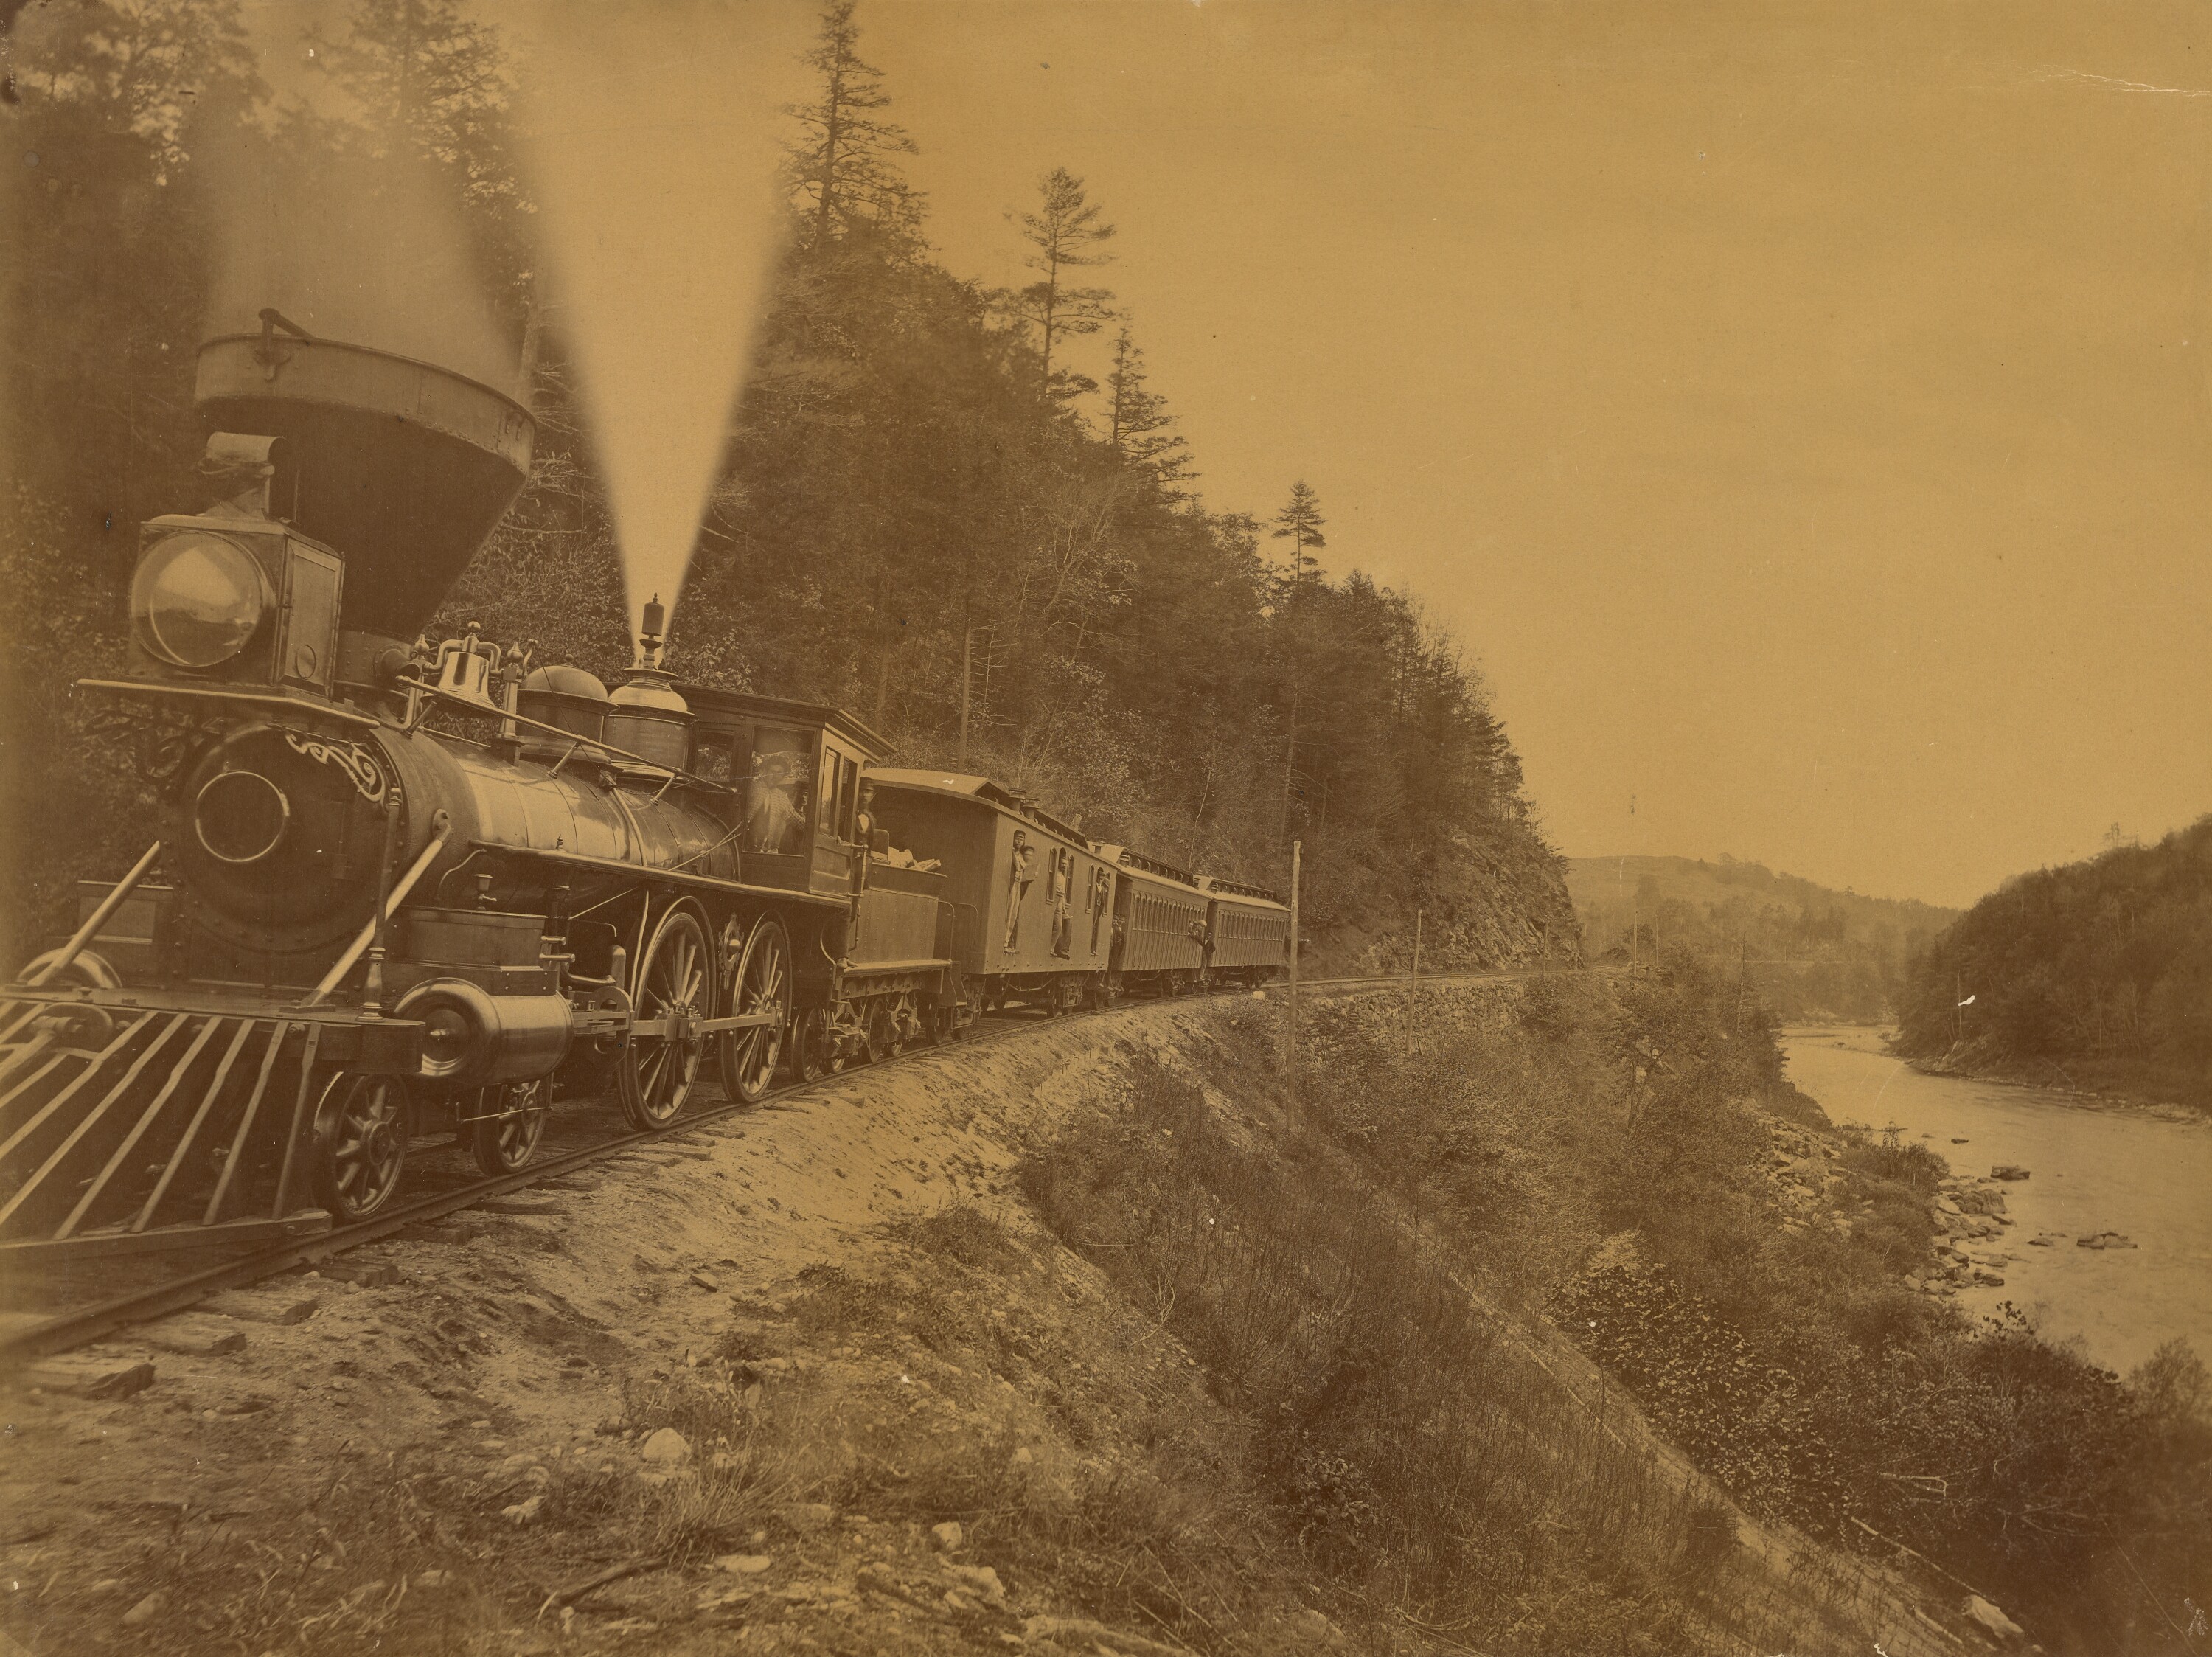 1870 Train on a Railroad